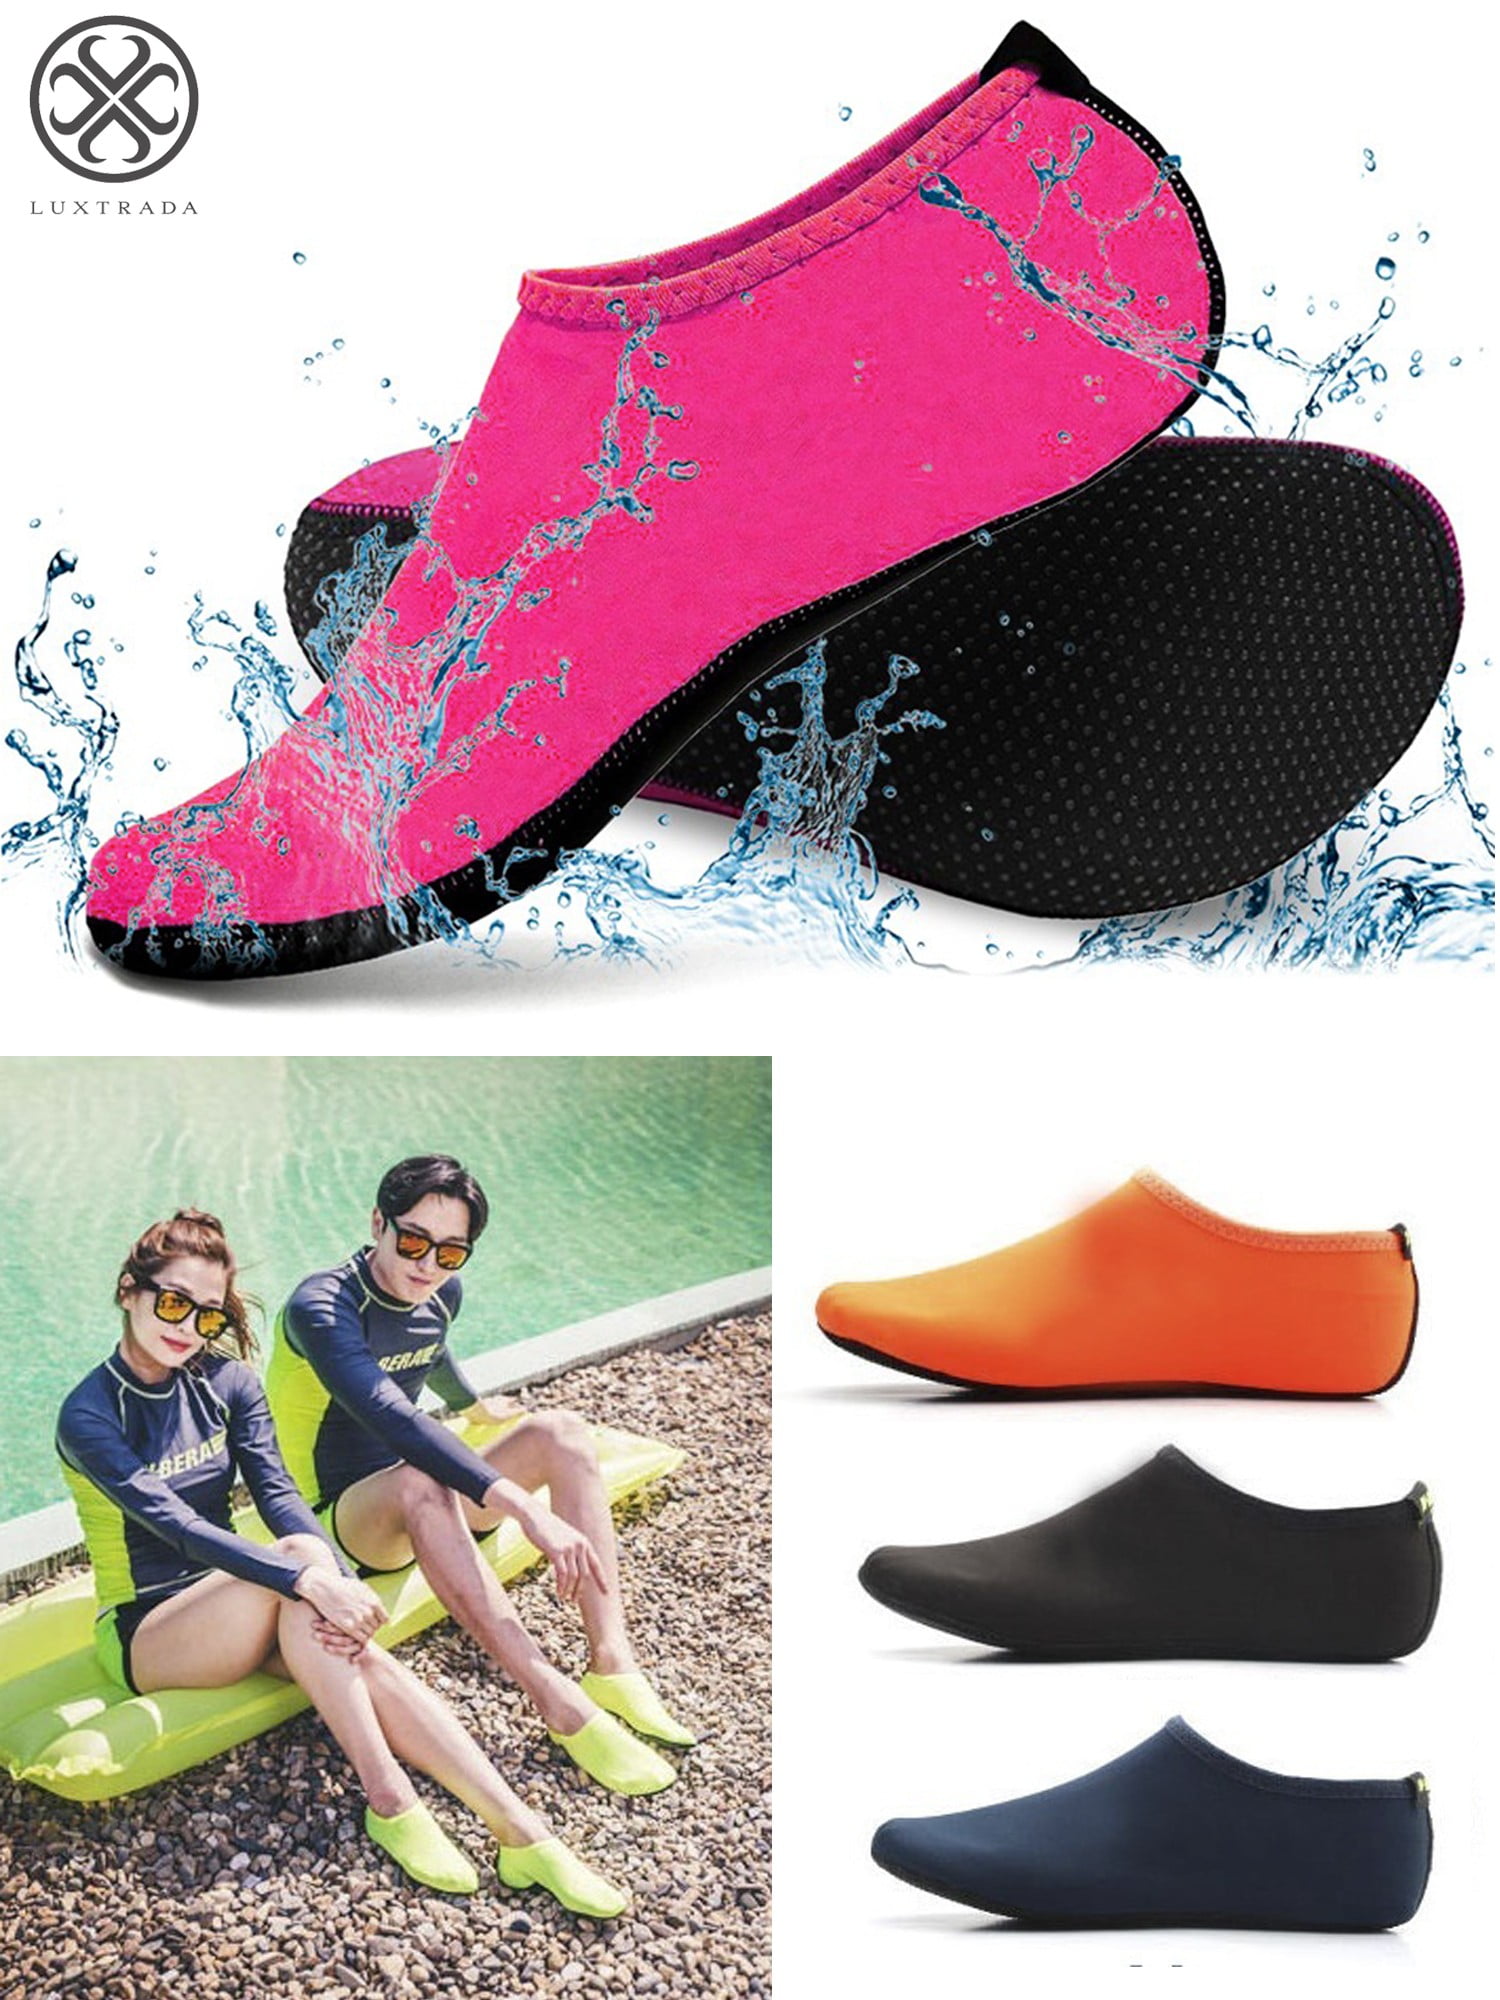 New Womens Wave Slip on Water Shoes/Aqua Socks/Beach Pool, Yoga